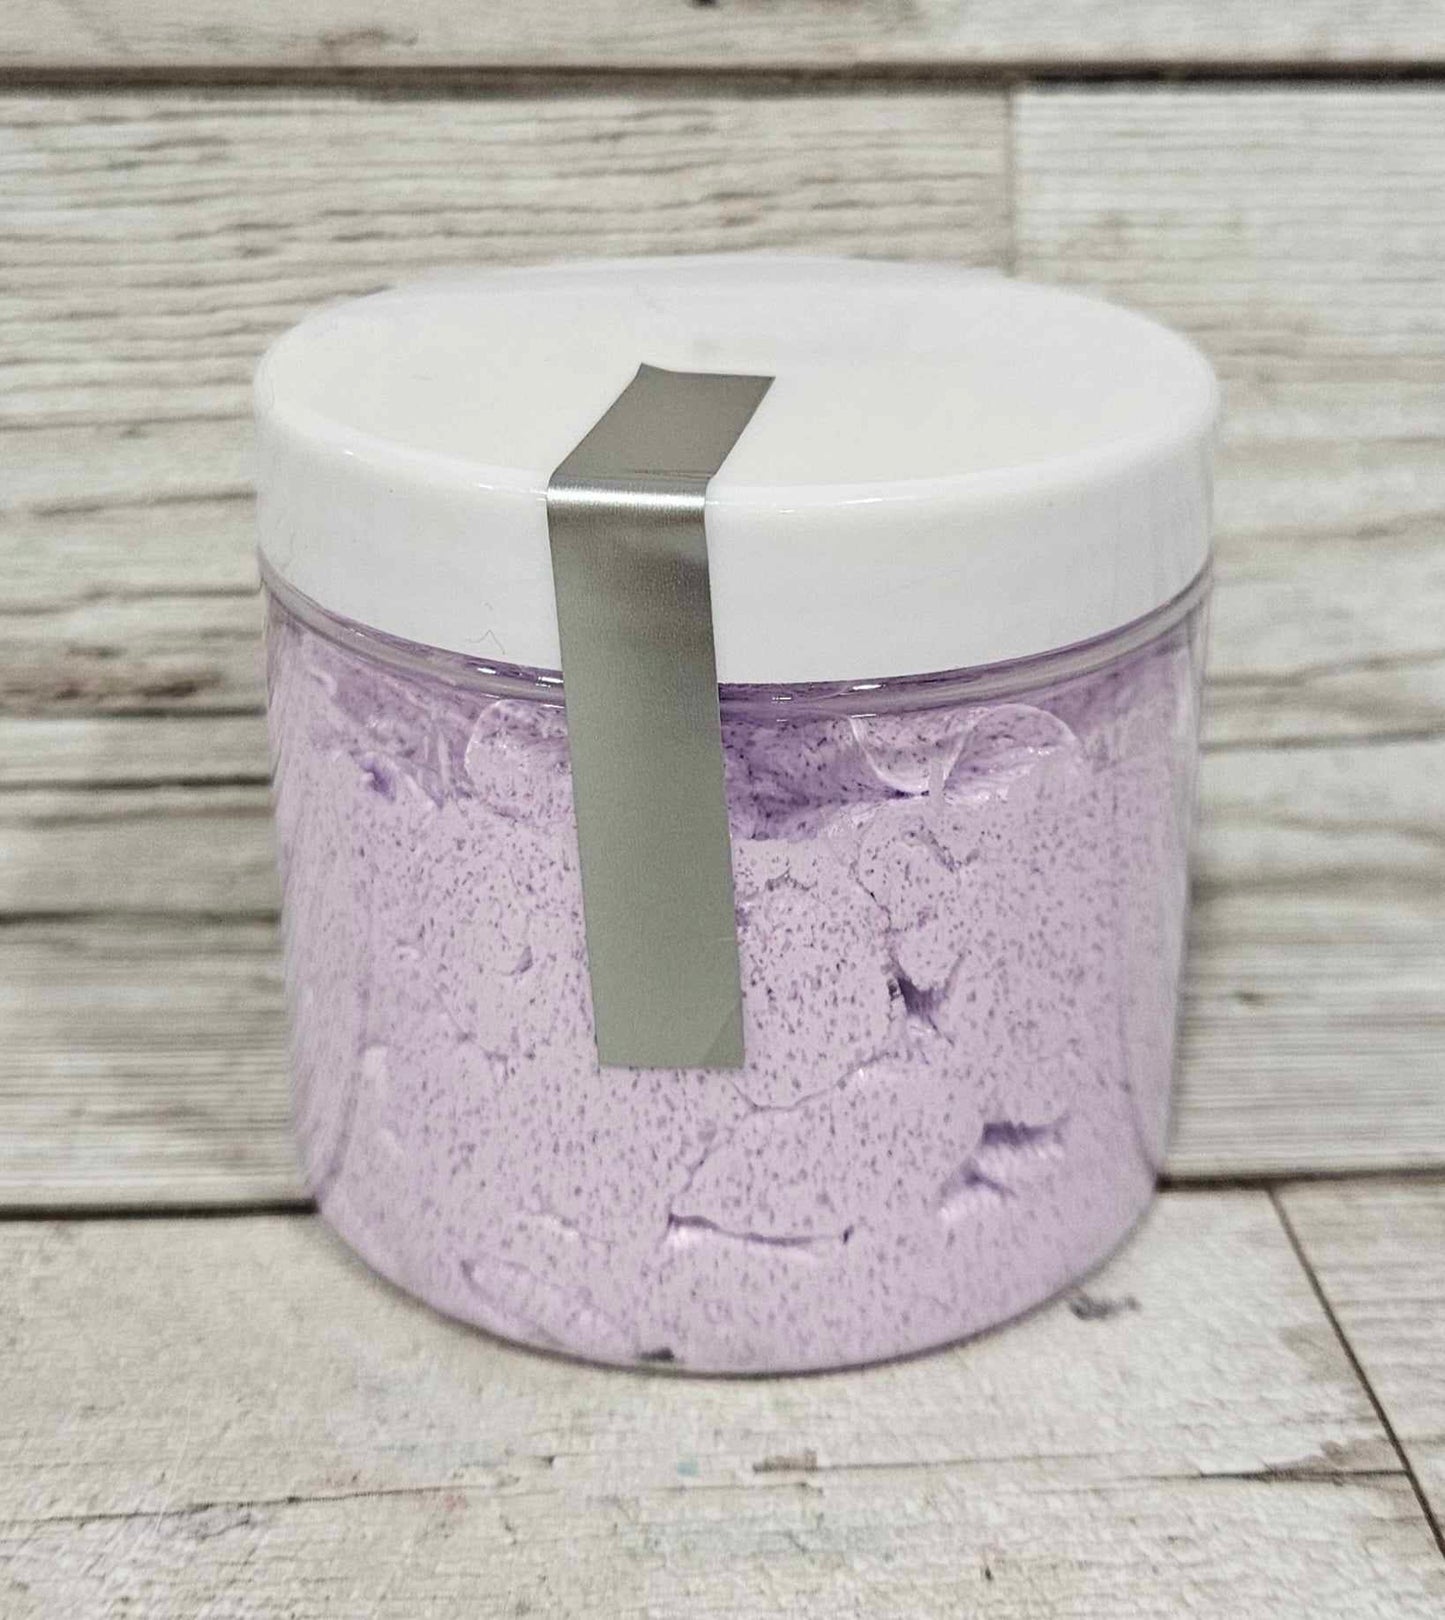 'Lavender and Chamomile' Foaming Body Sugar Scrub-150g